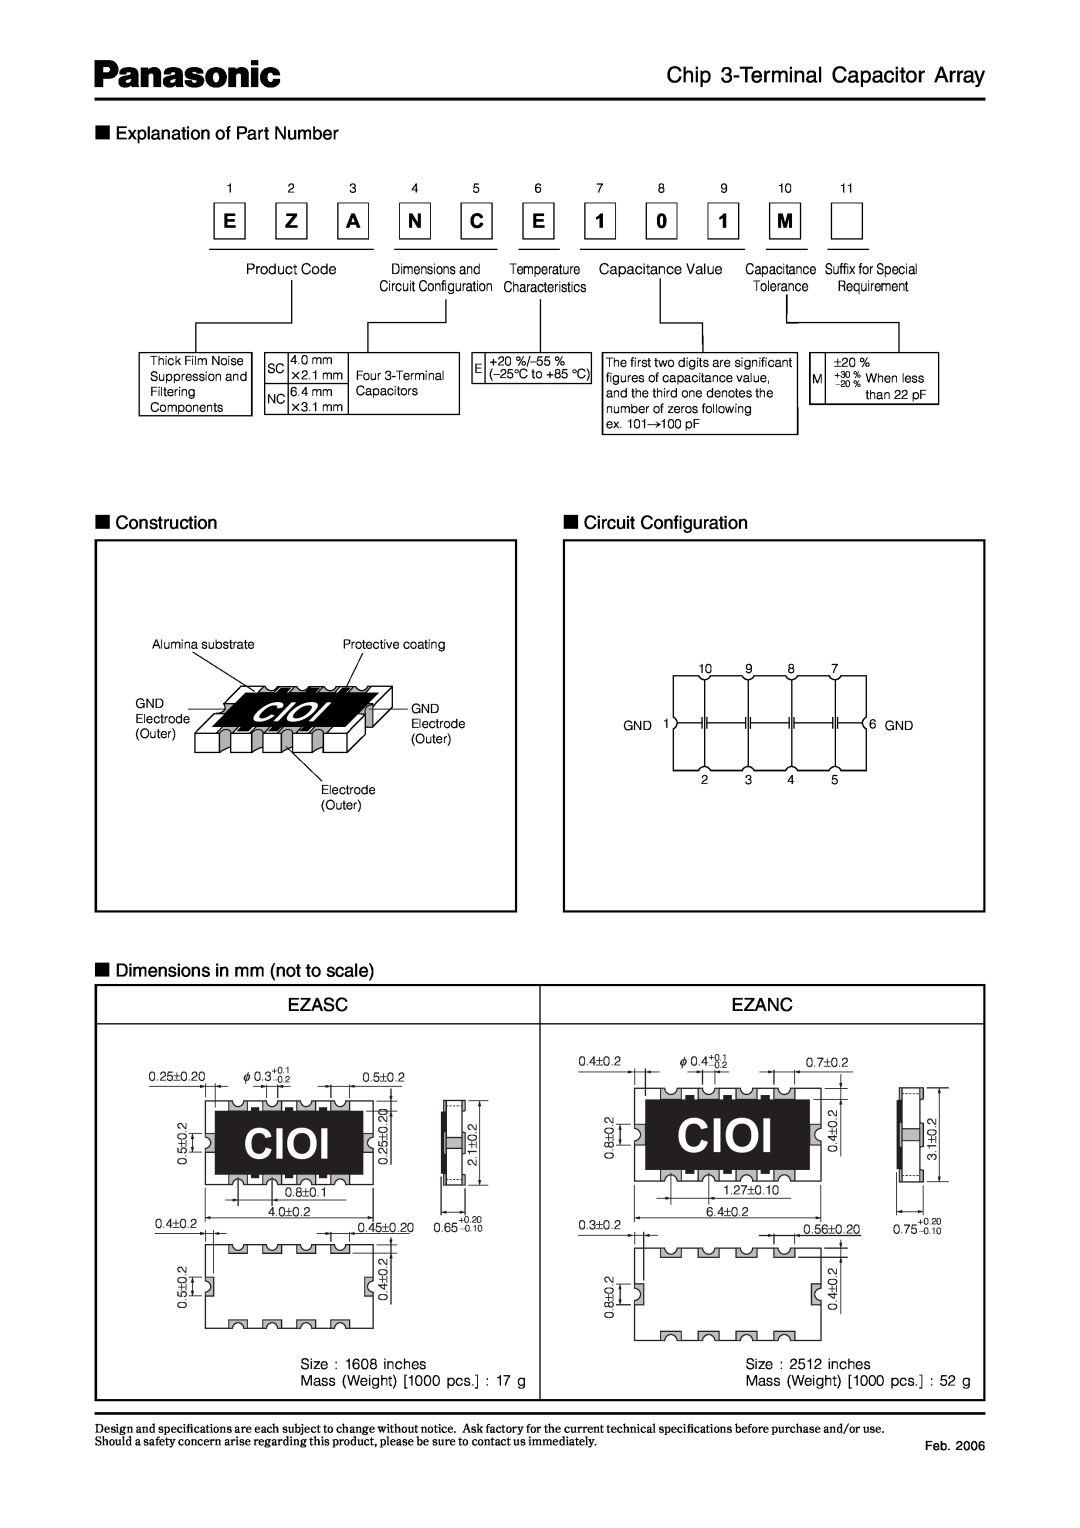 Panasonic EZANC Explanation of Part Number, Construction, Circuit Conﬁguration, Dimensions in mm not to scale EZASC, Ezanc 